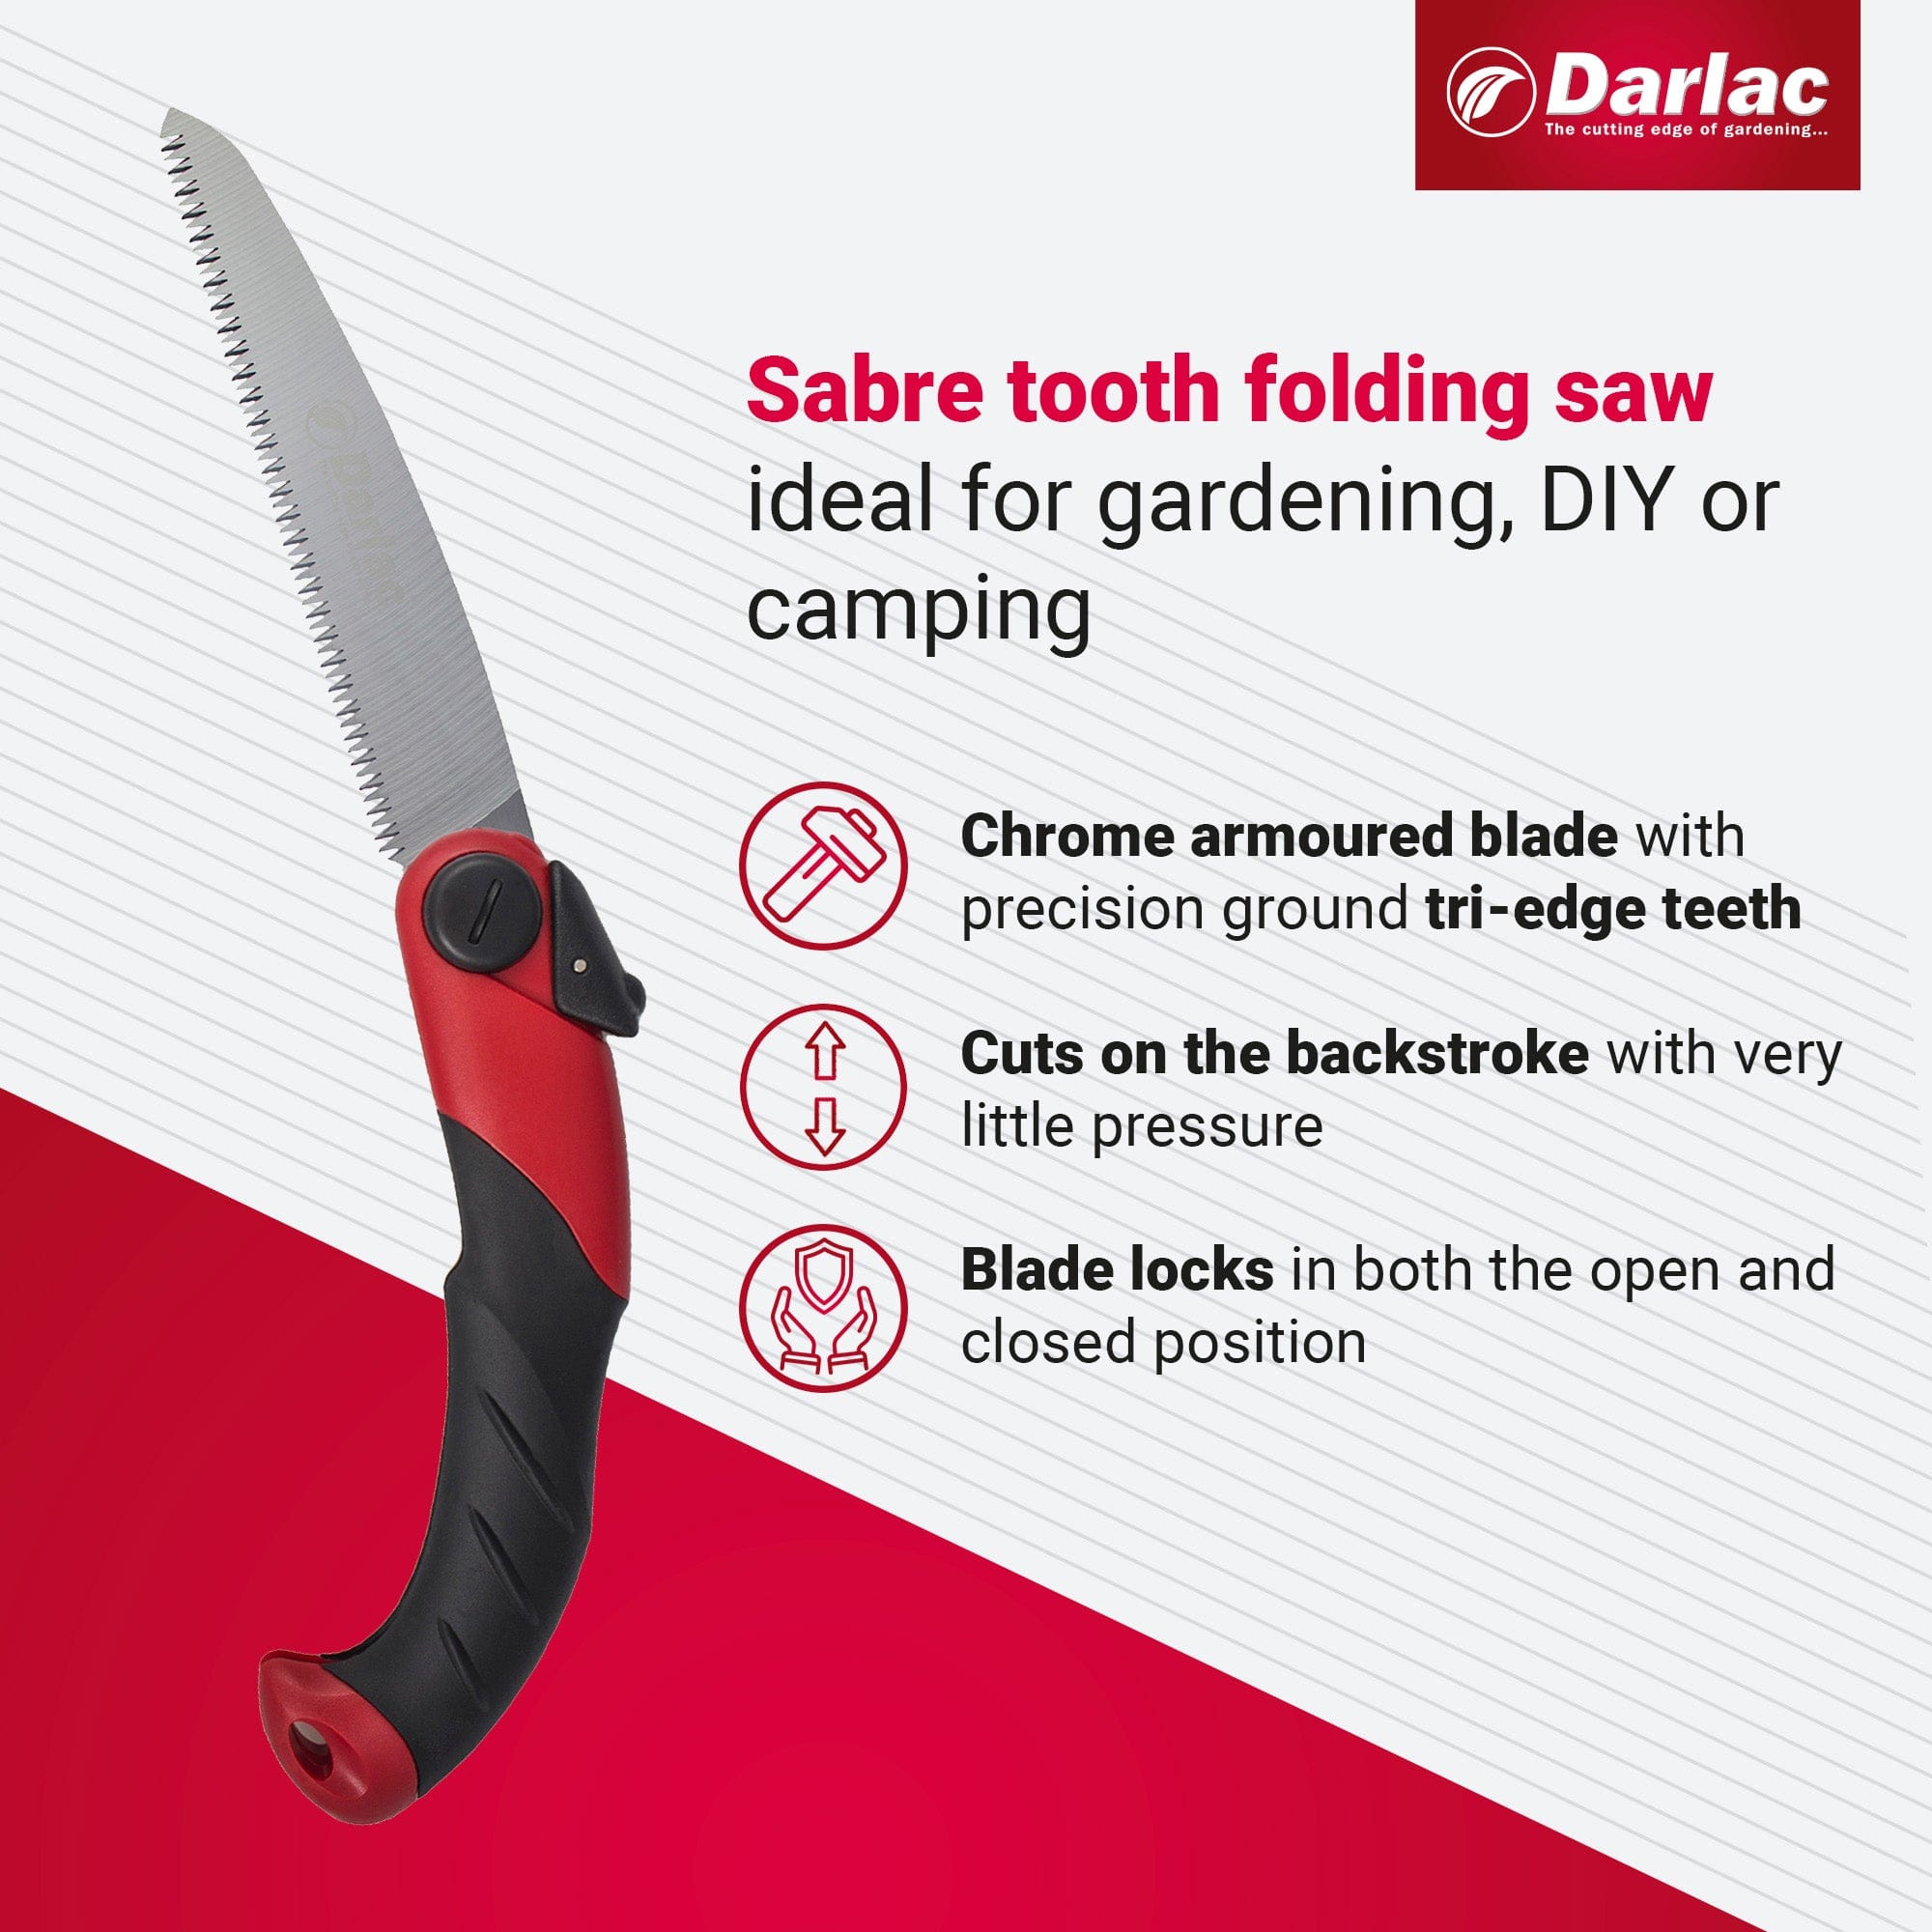 Darlac Sabre Tooth Folding Saw